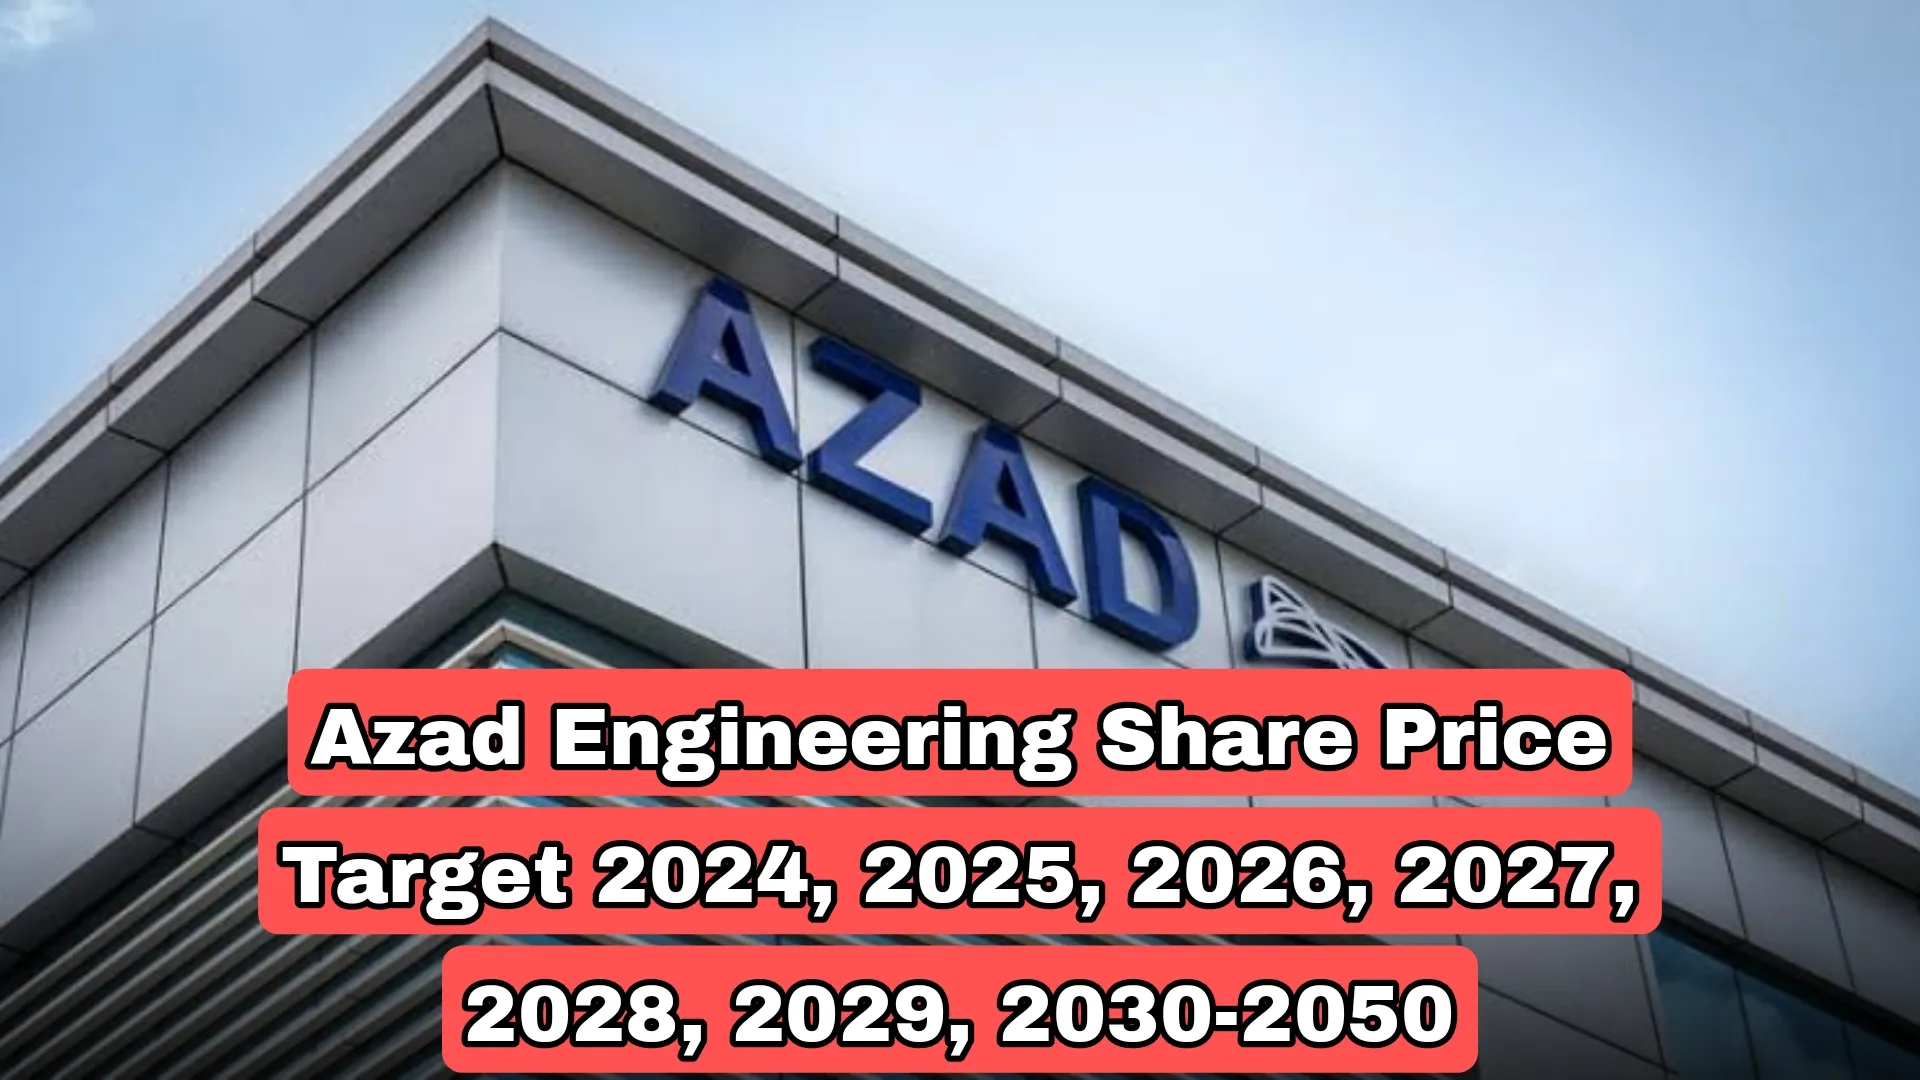 Azad Engineering Share Price Target 2024, 2025, 2026, 2027, 2028, 2029, 2030, 2035, 2040, 2050.